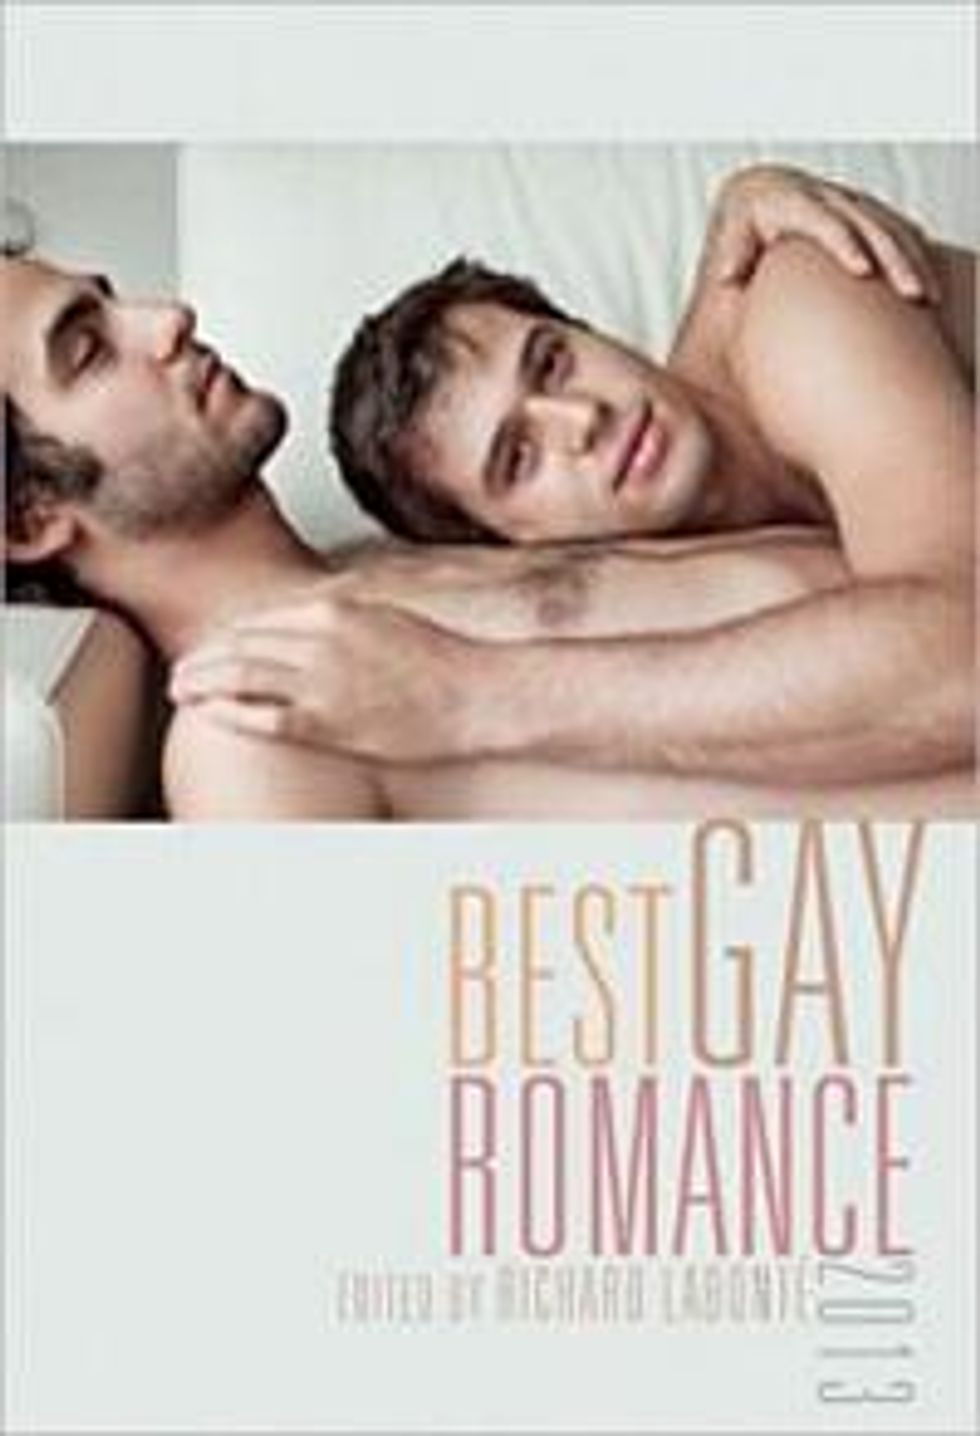 Best-gay-romancex200